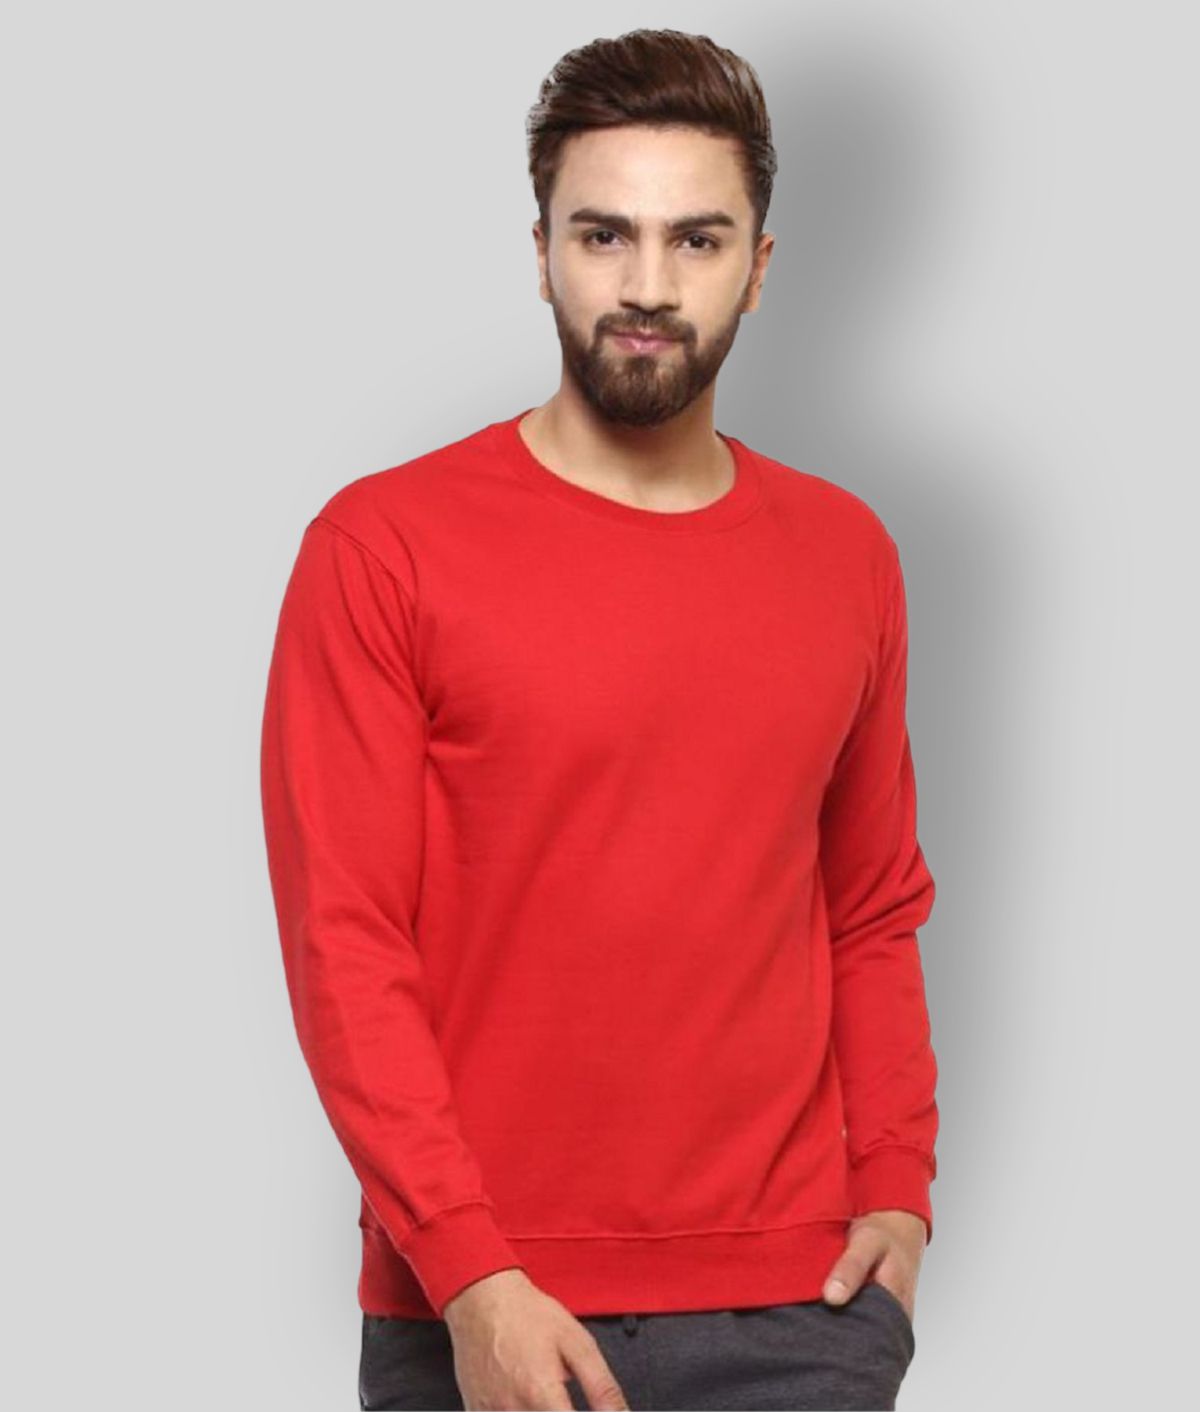     			Leotude Maroon Sweatshirt Pack of 1